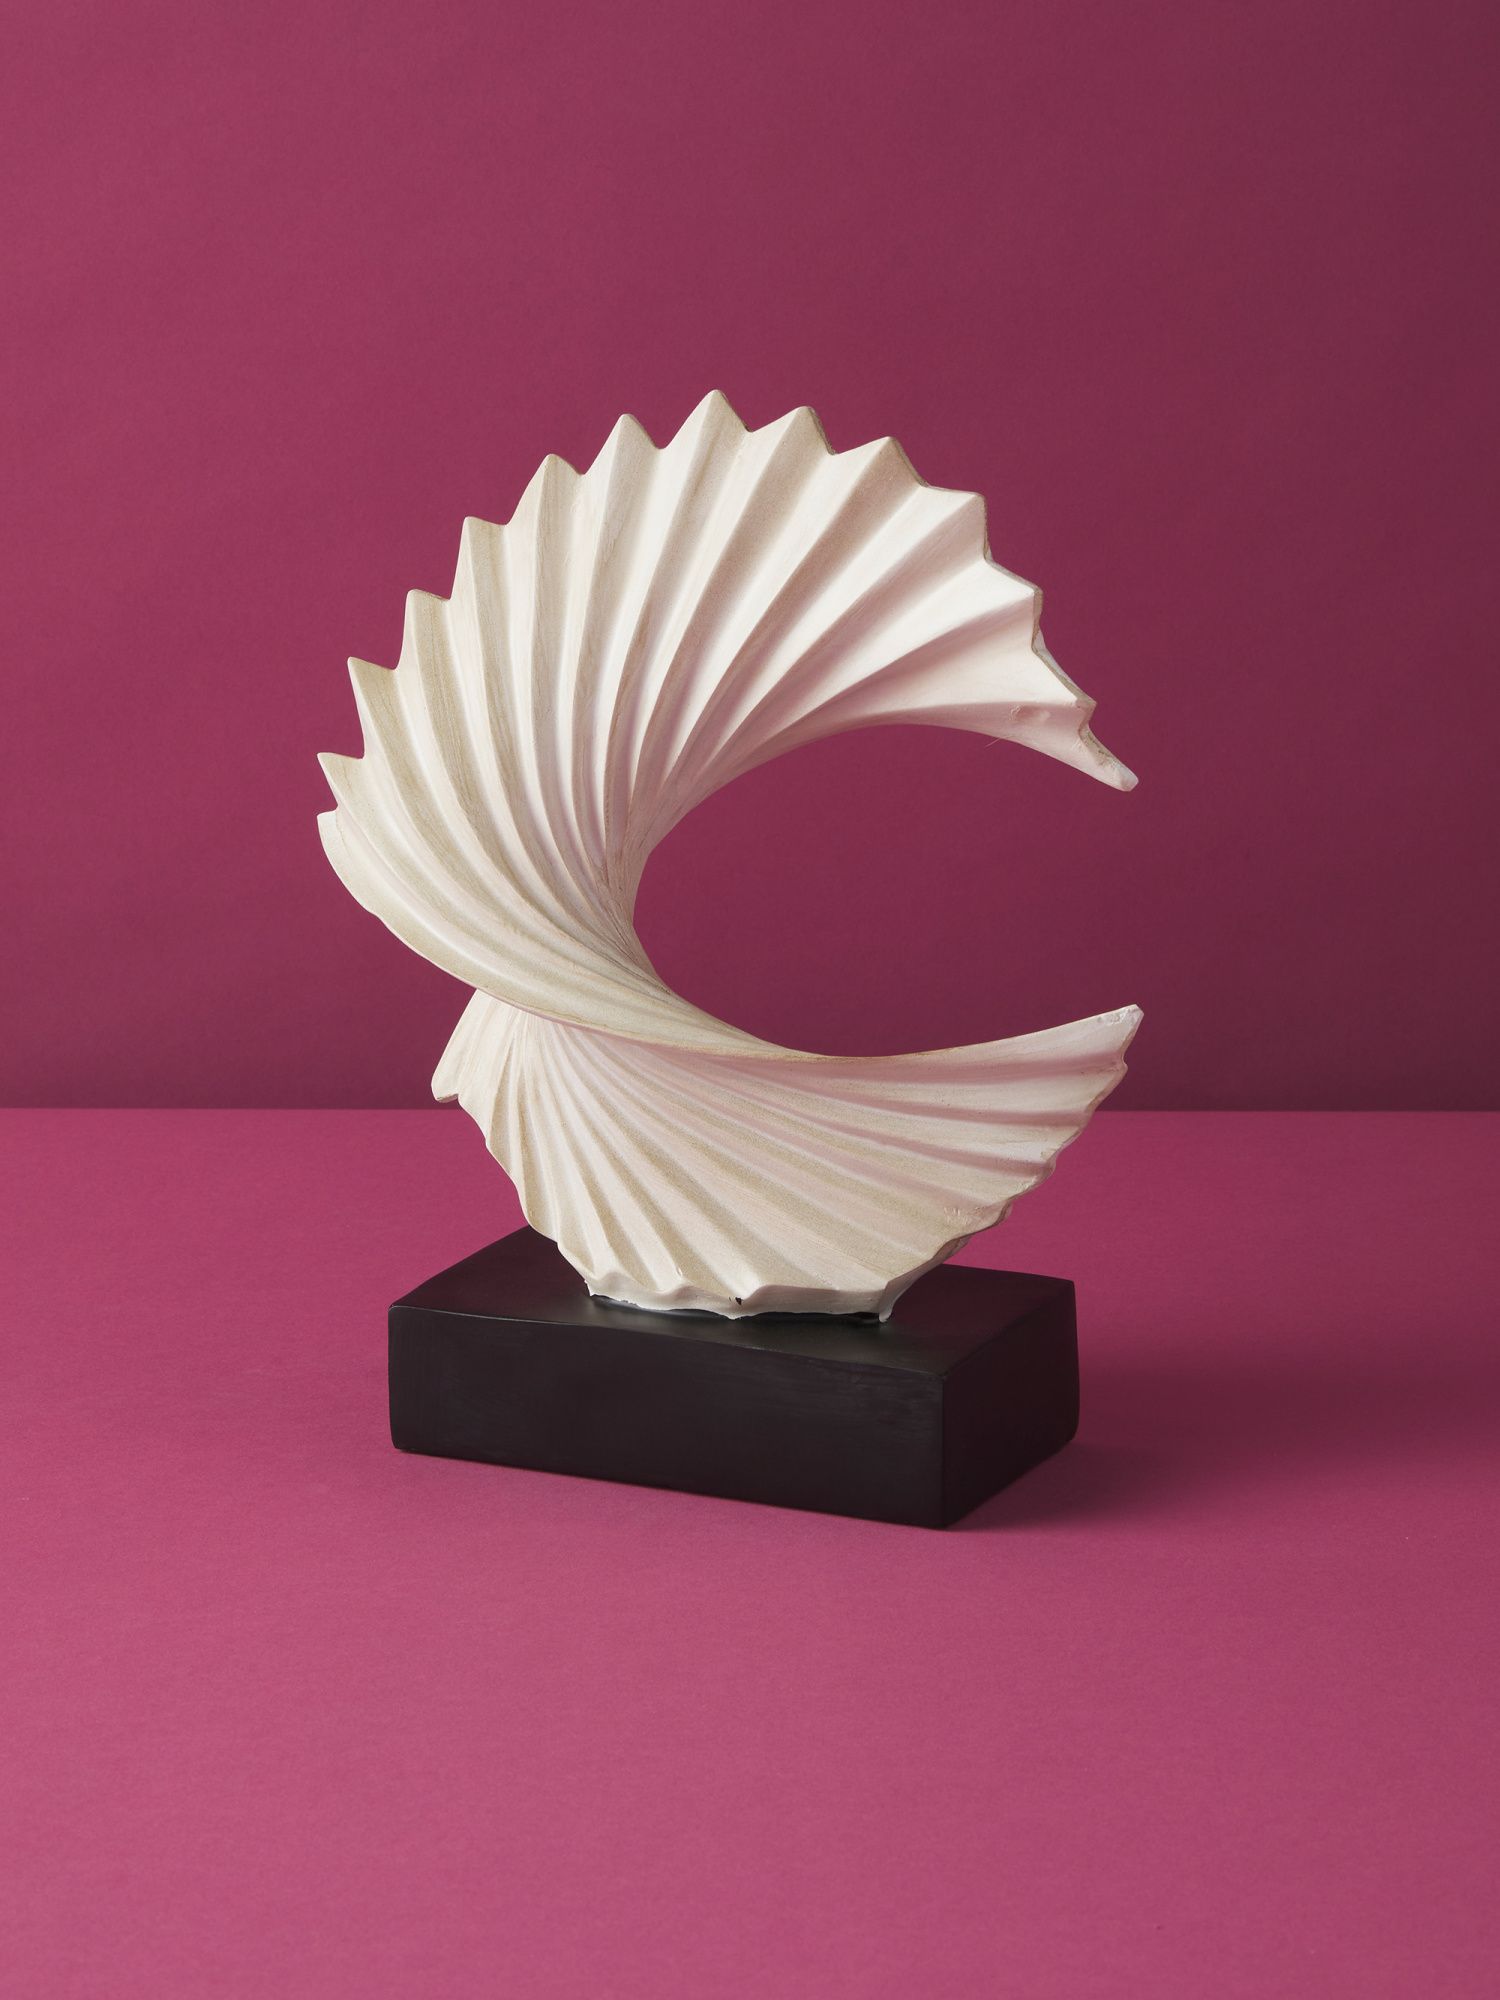 10x12 Abstract Ocean Wave Decor | Decorative Objects | HomeGoods | HomeGoods